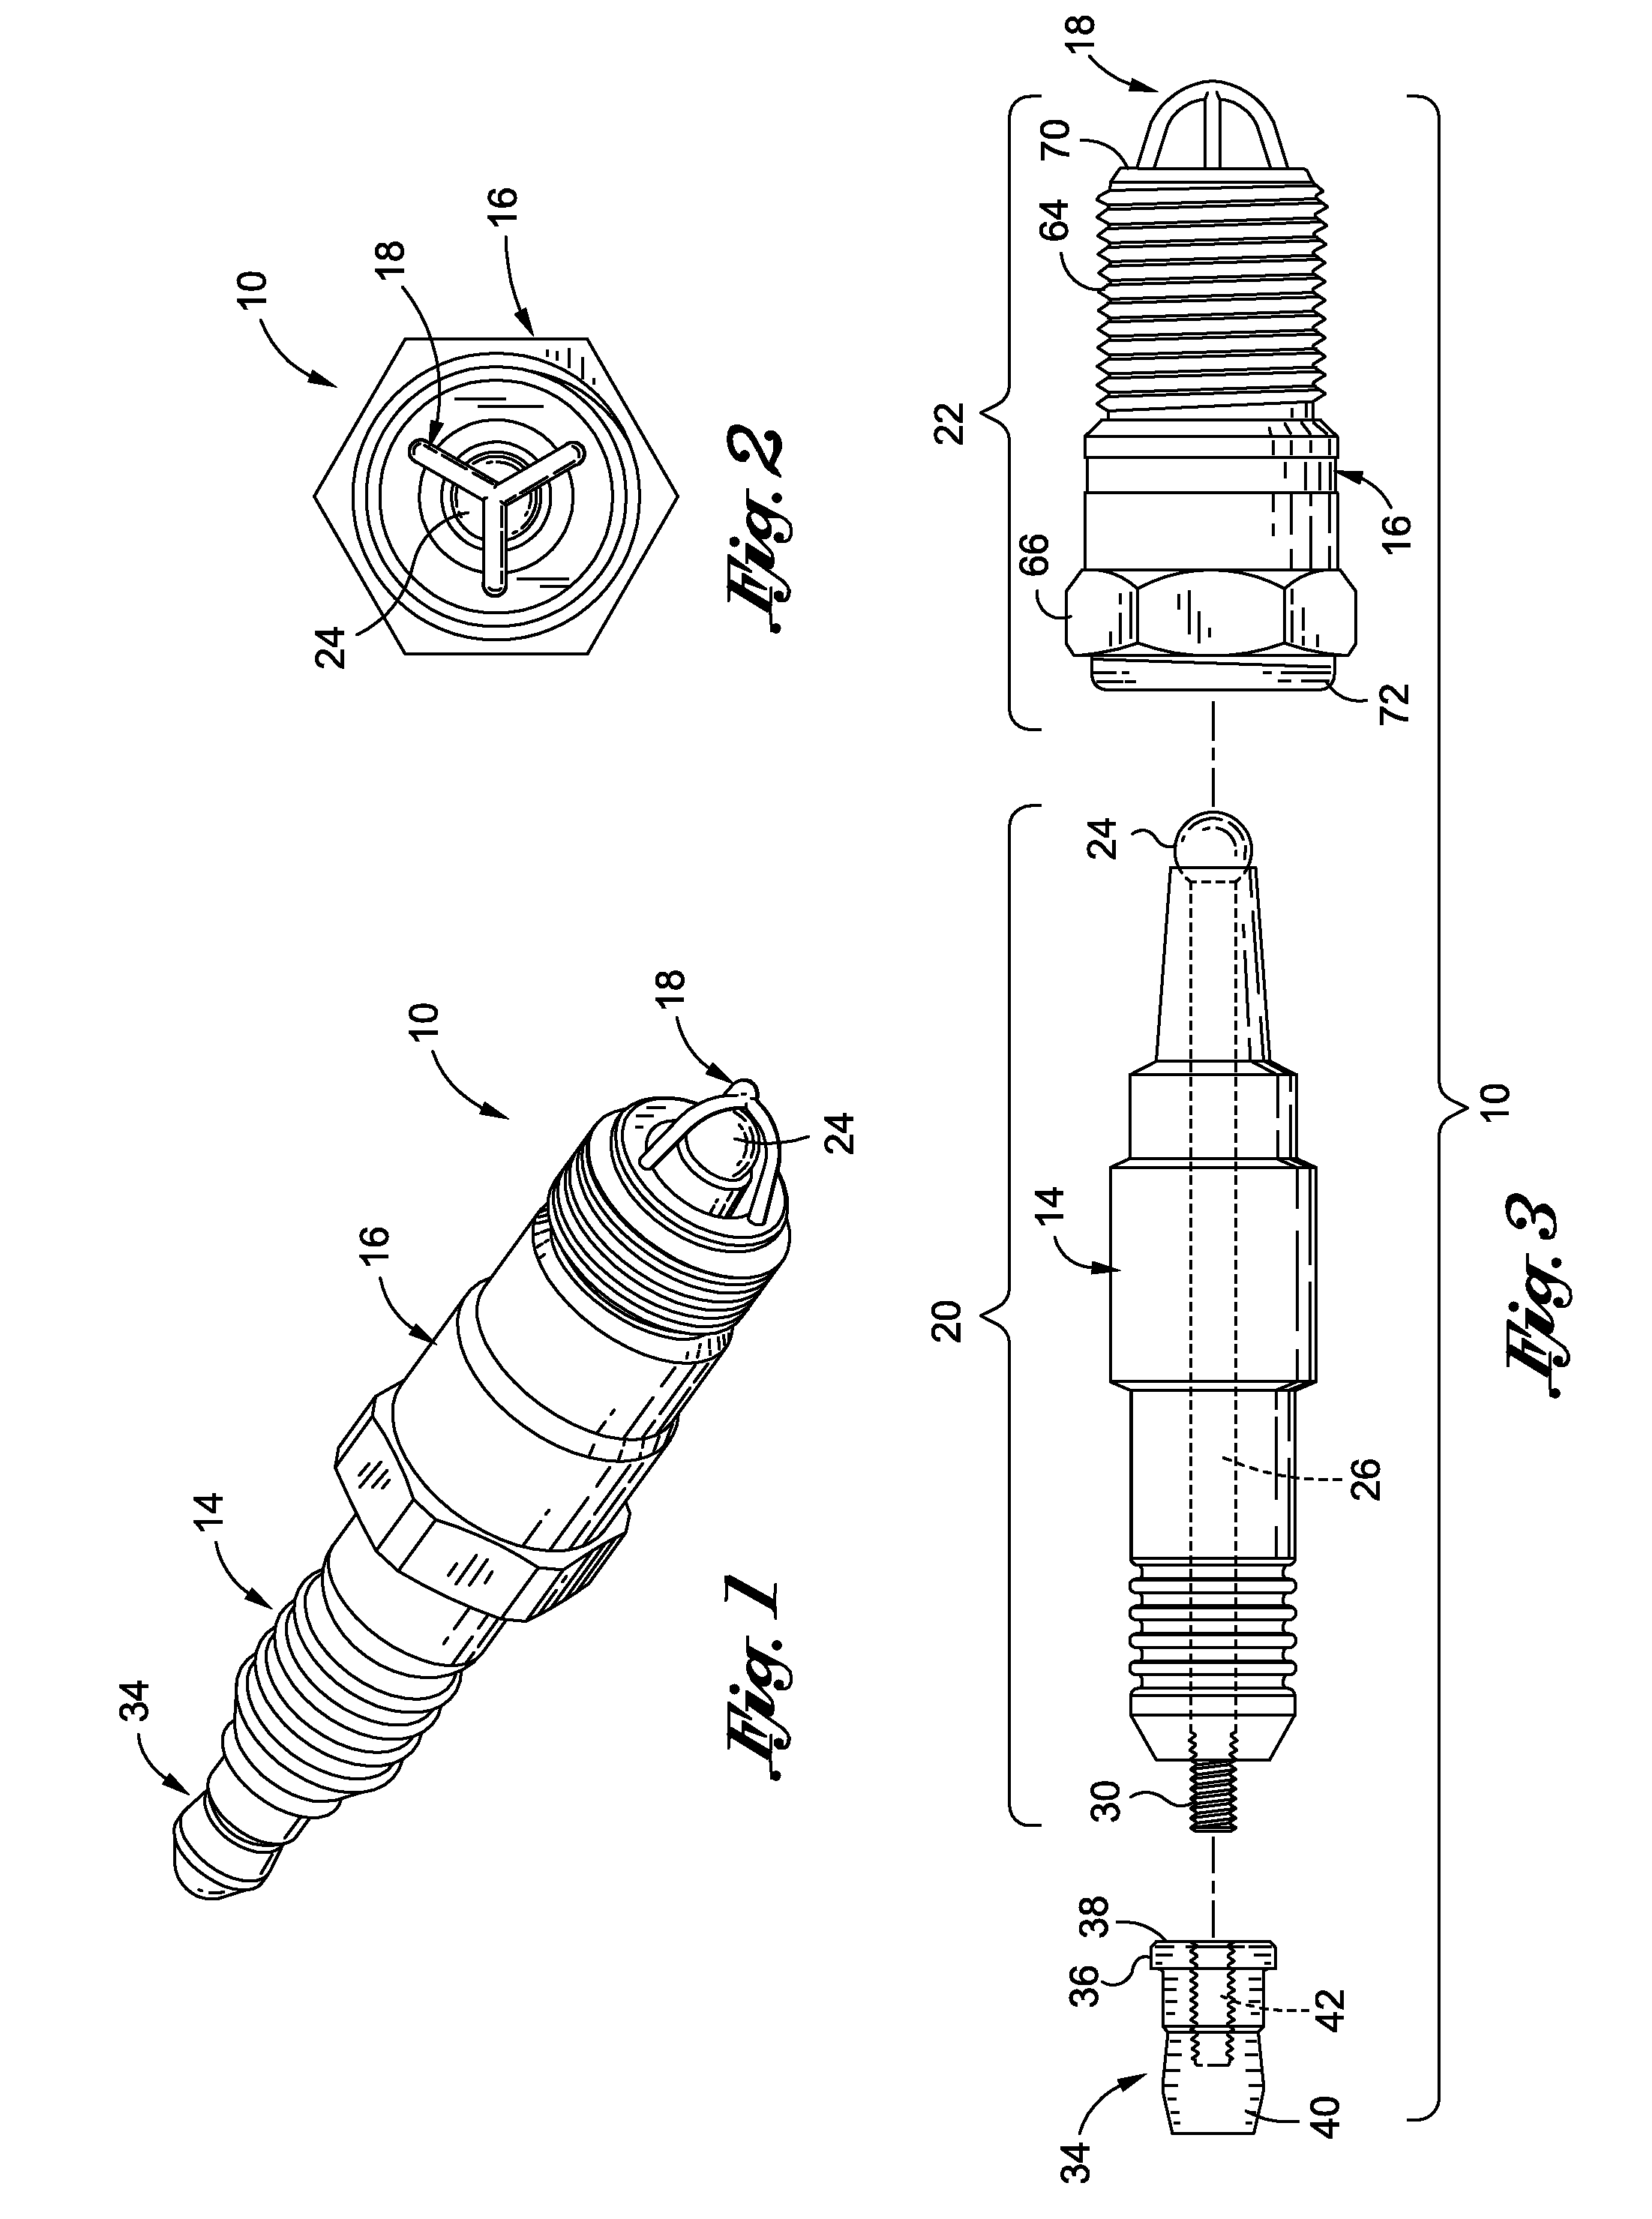 Method of manufacturing a spark plug